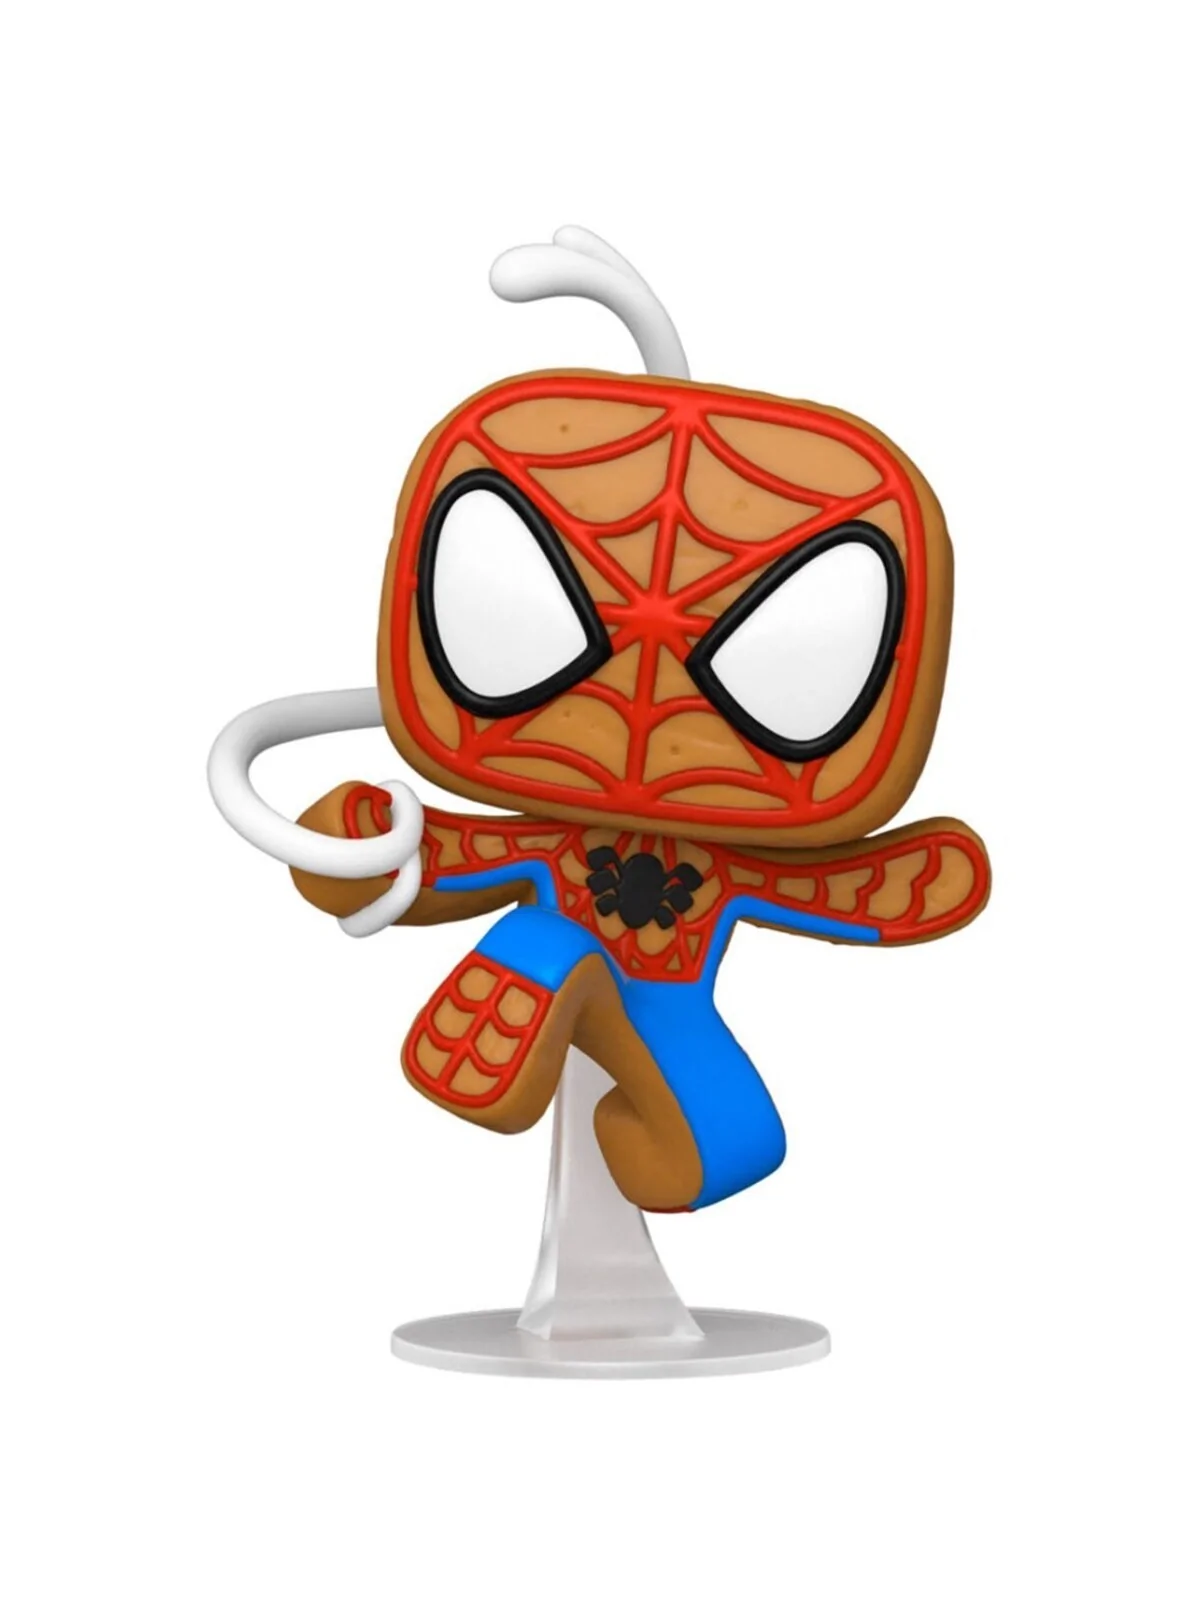 Comprar Funko POP! Marvel Navidad Galleta Jengibre Spider-Man (939) ba